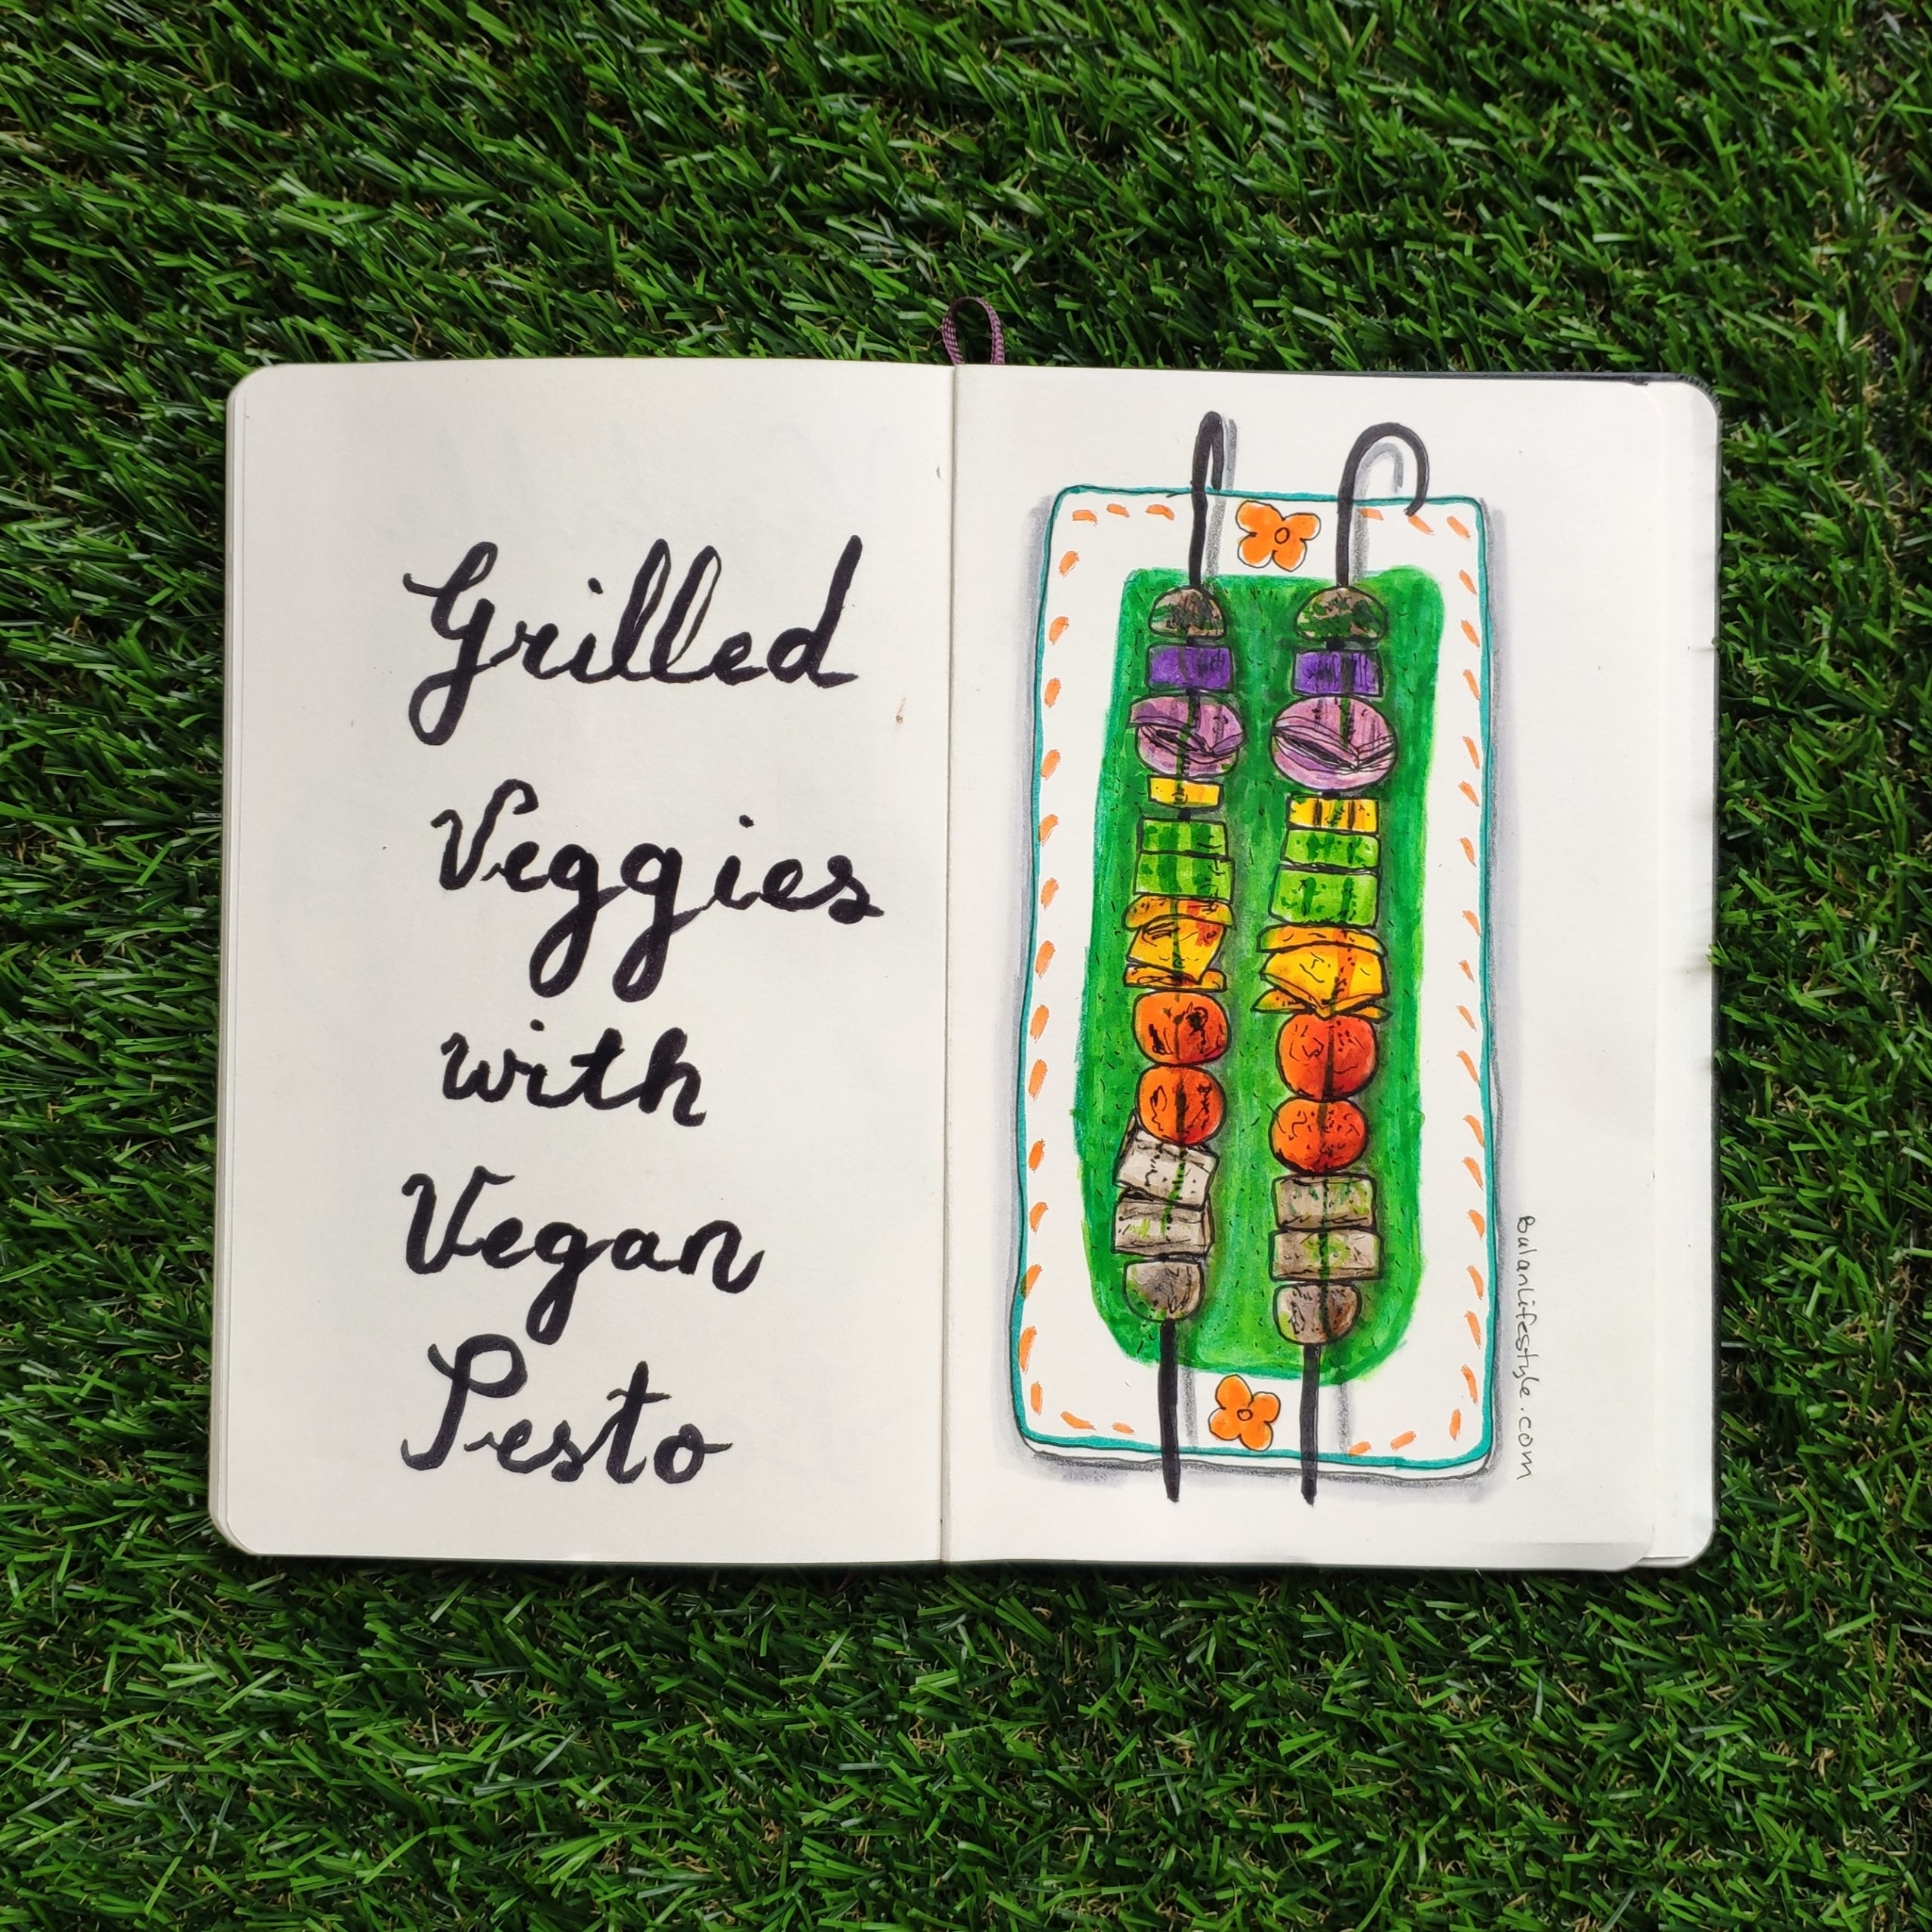 Grilled veggies and vegan pesto